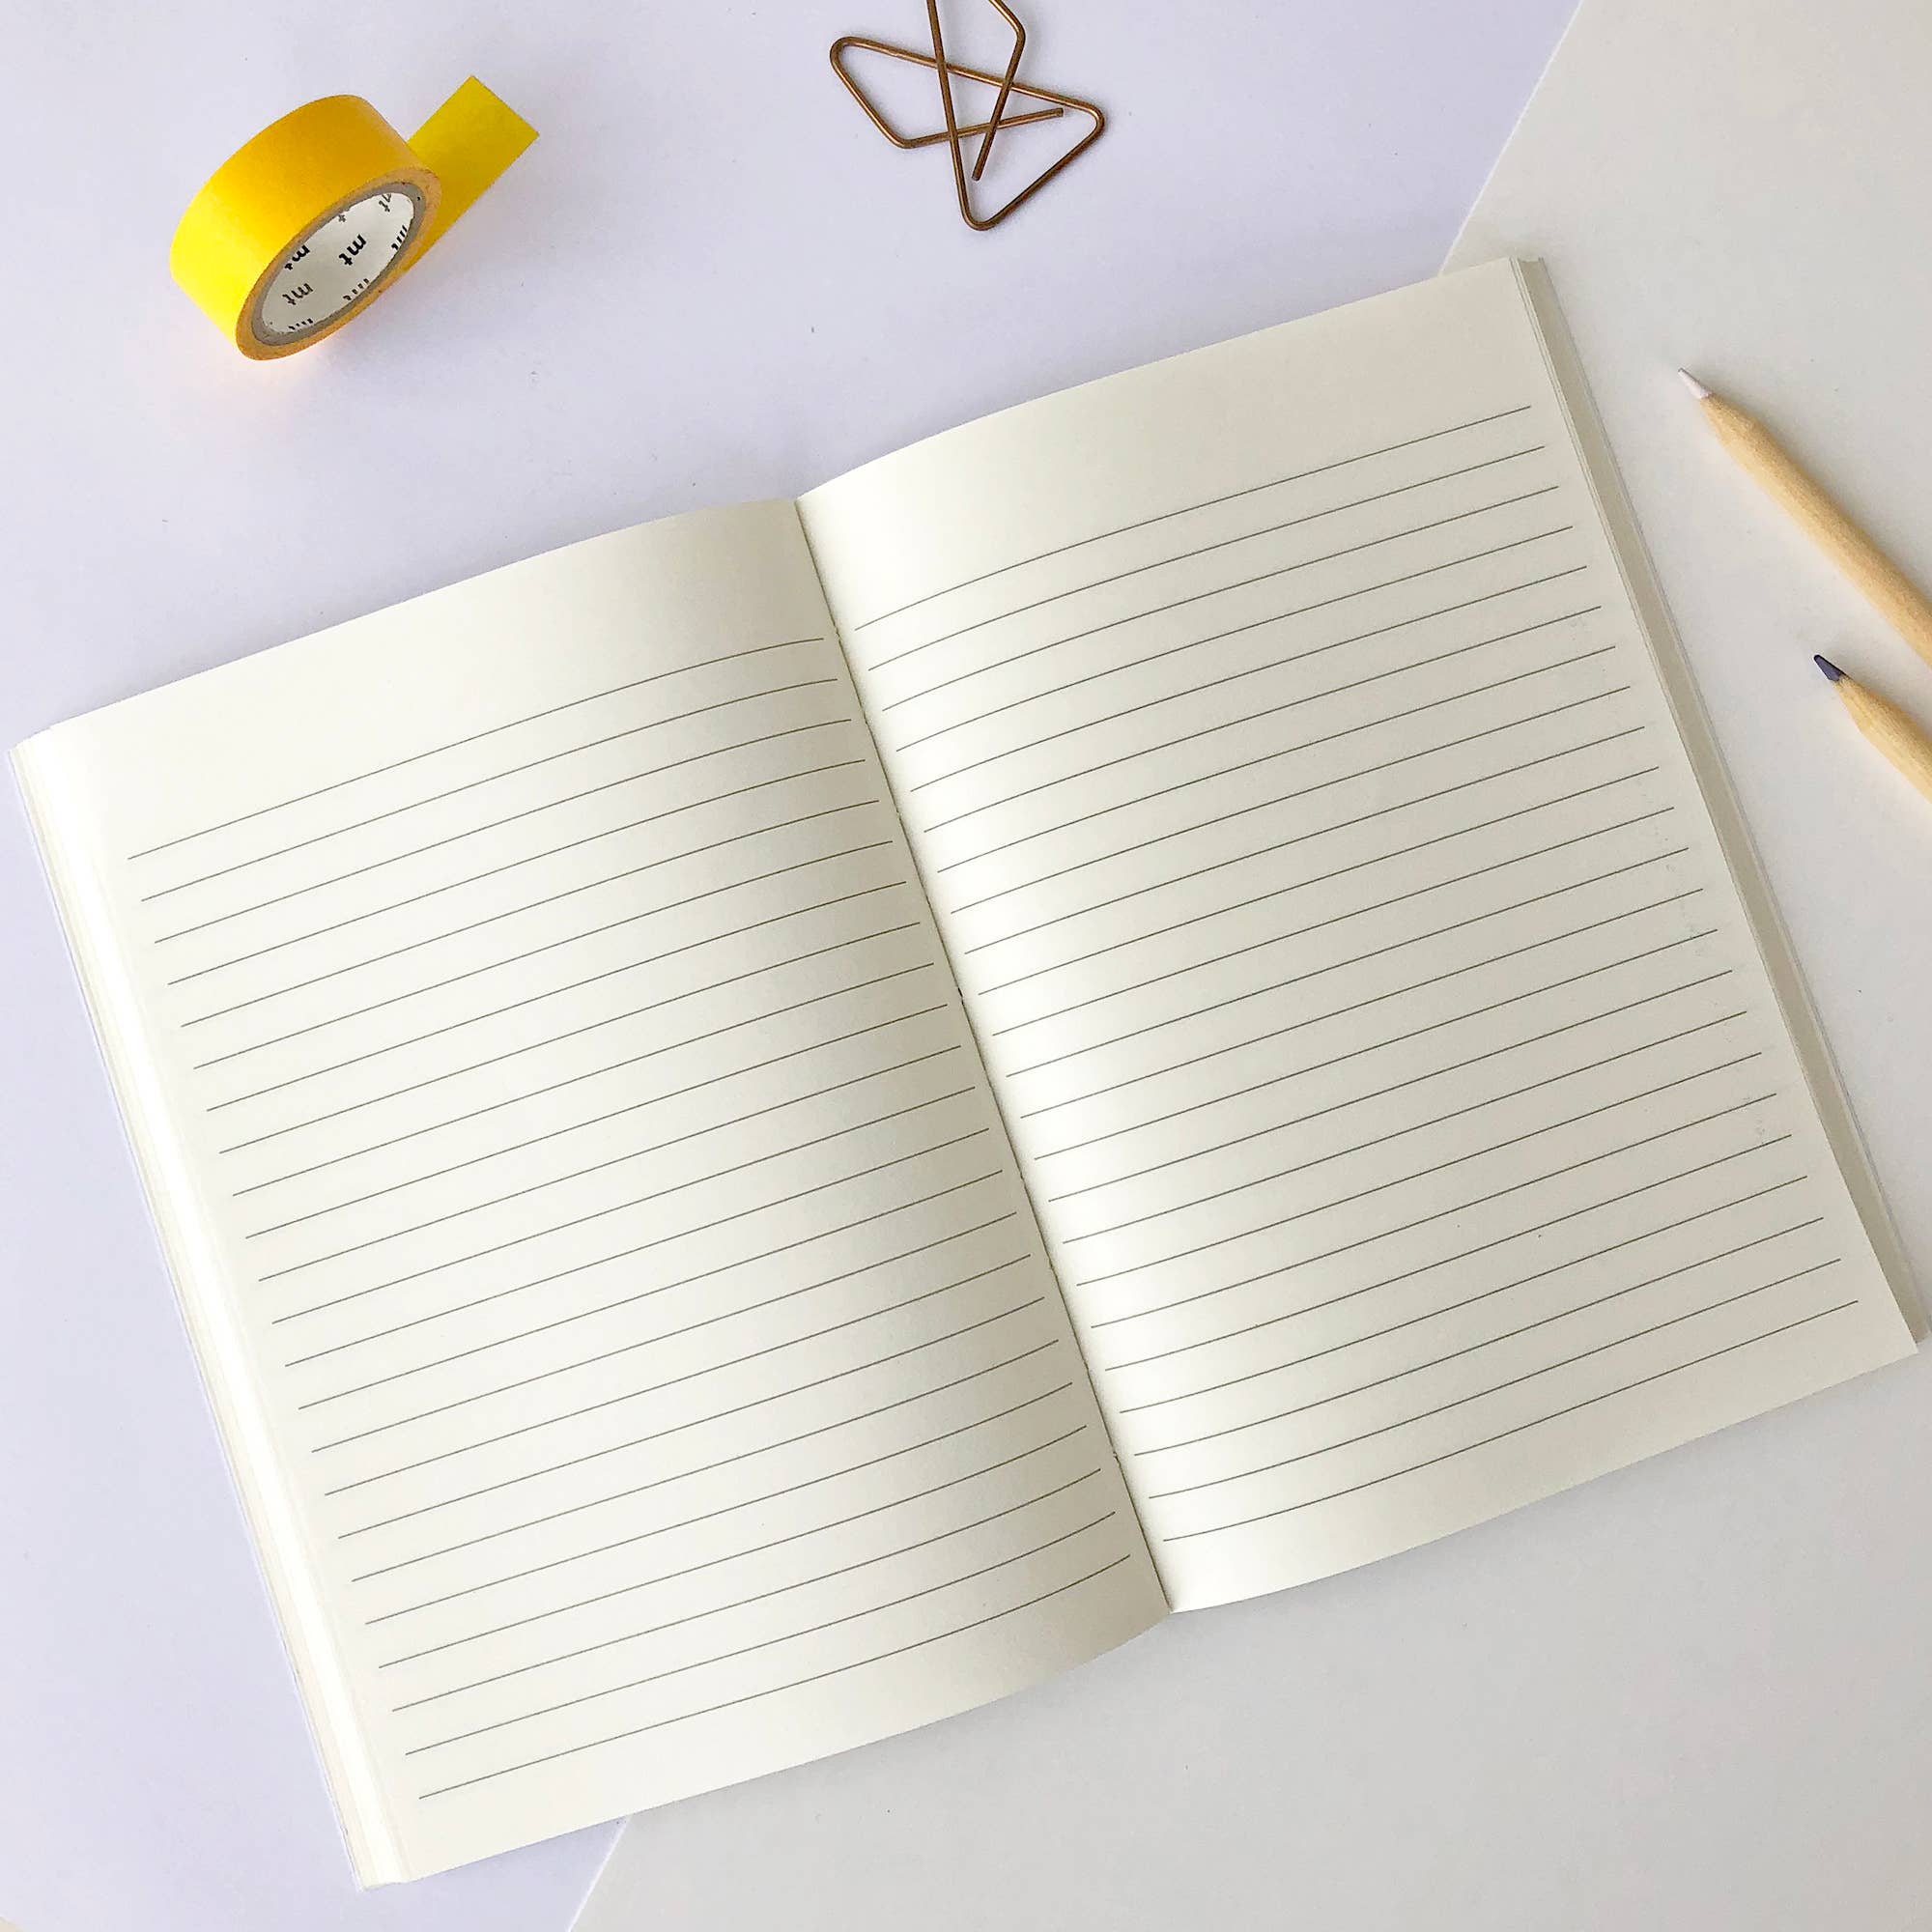 Letterpress Good / Bad Ideas Notebook